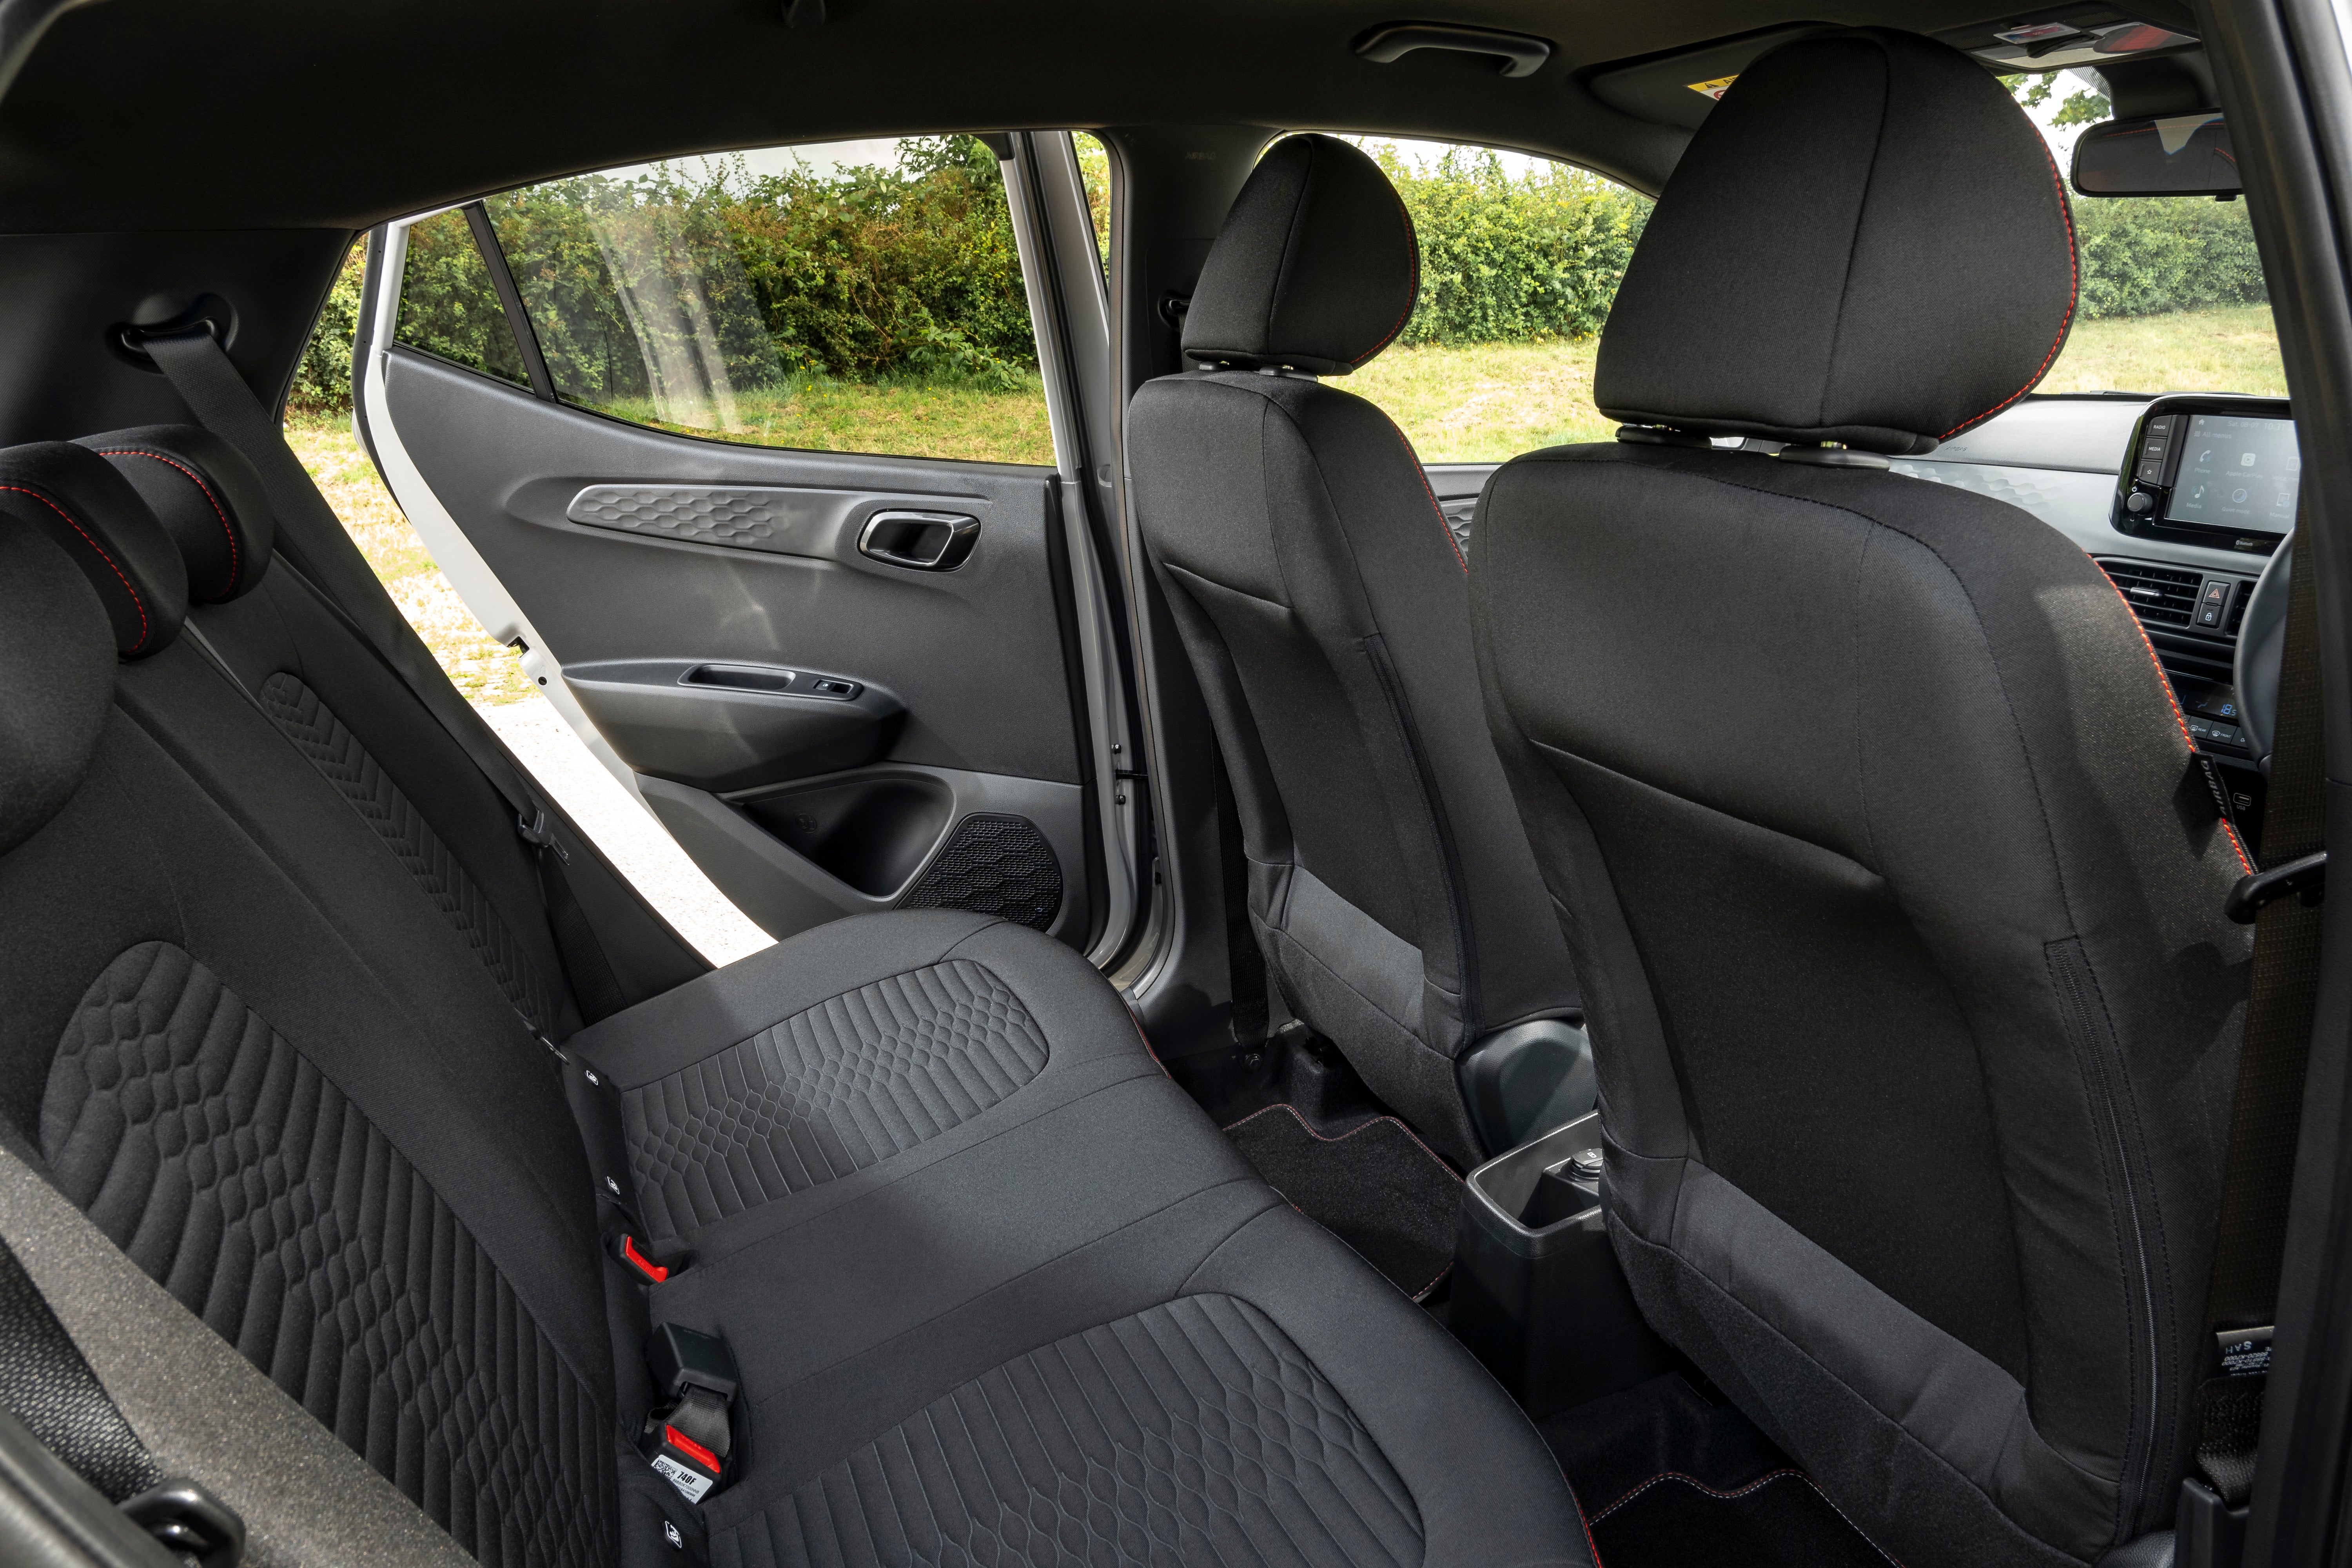 Hyundai i10 rear seat space